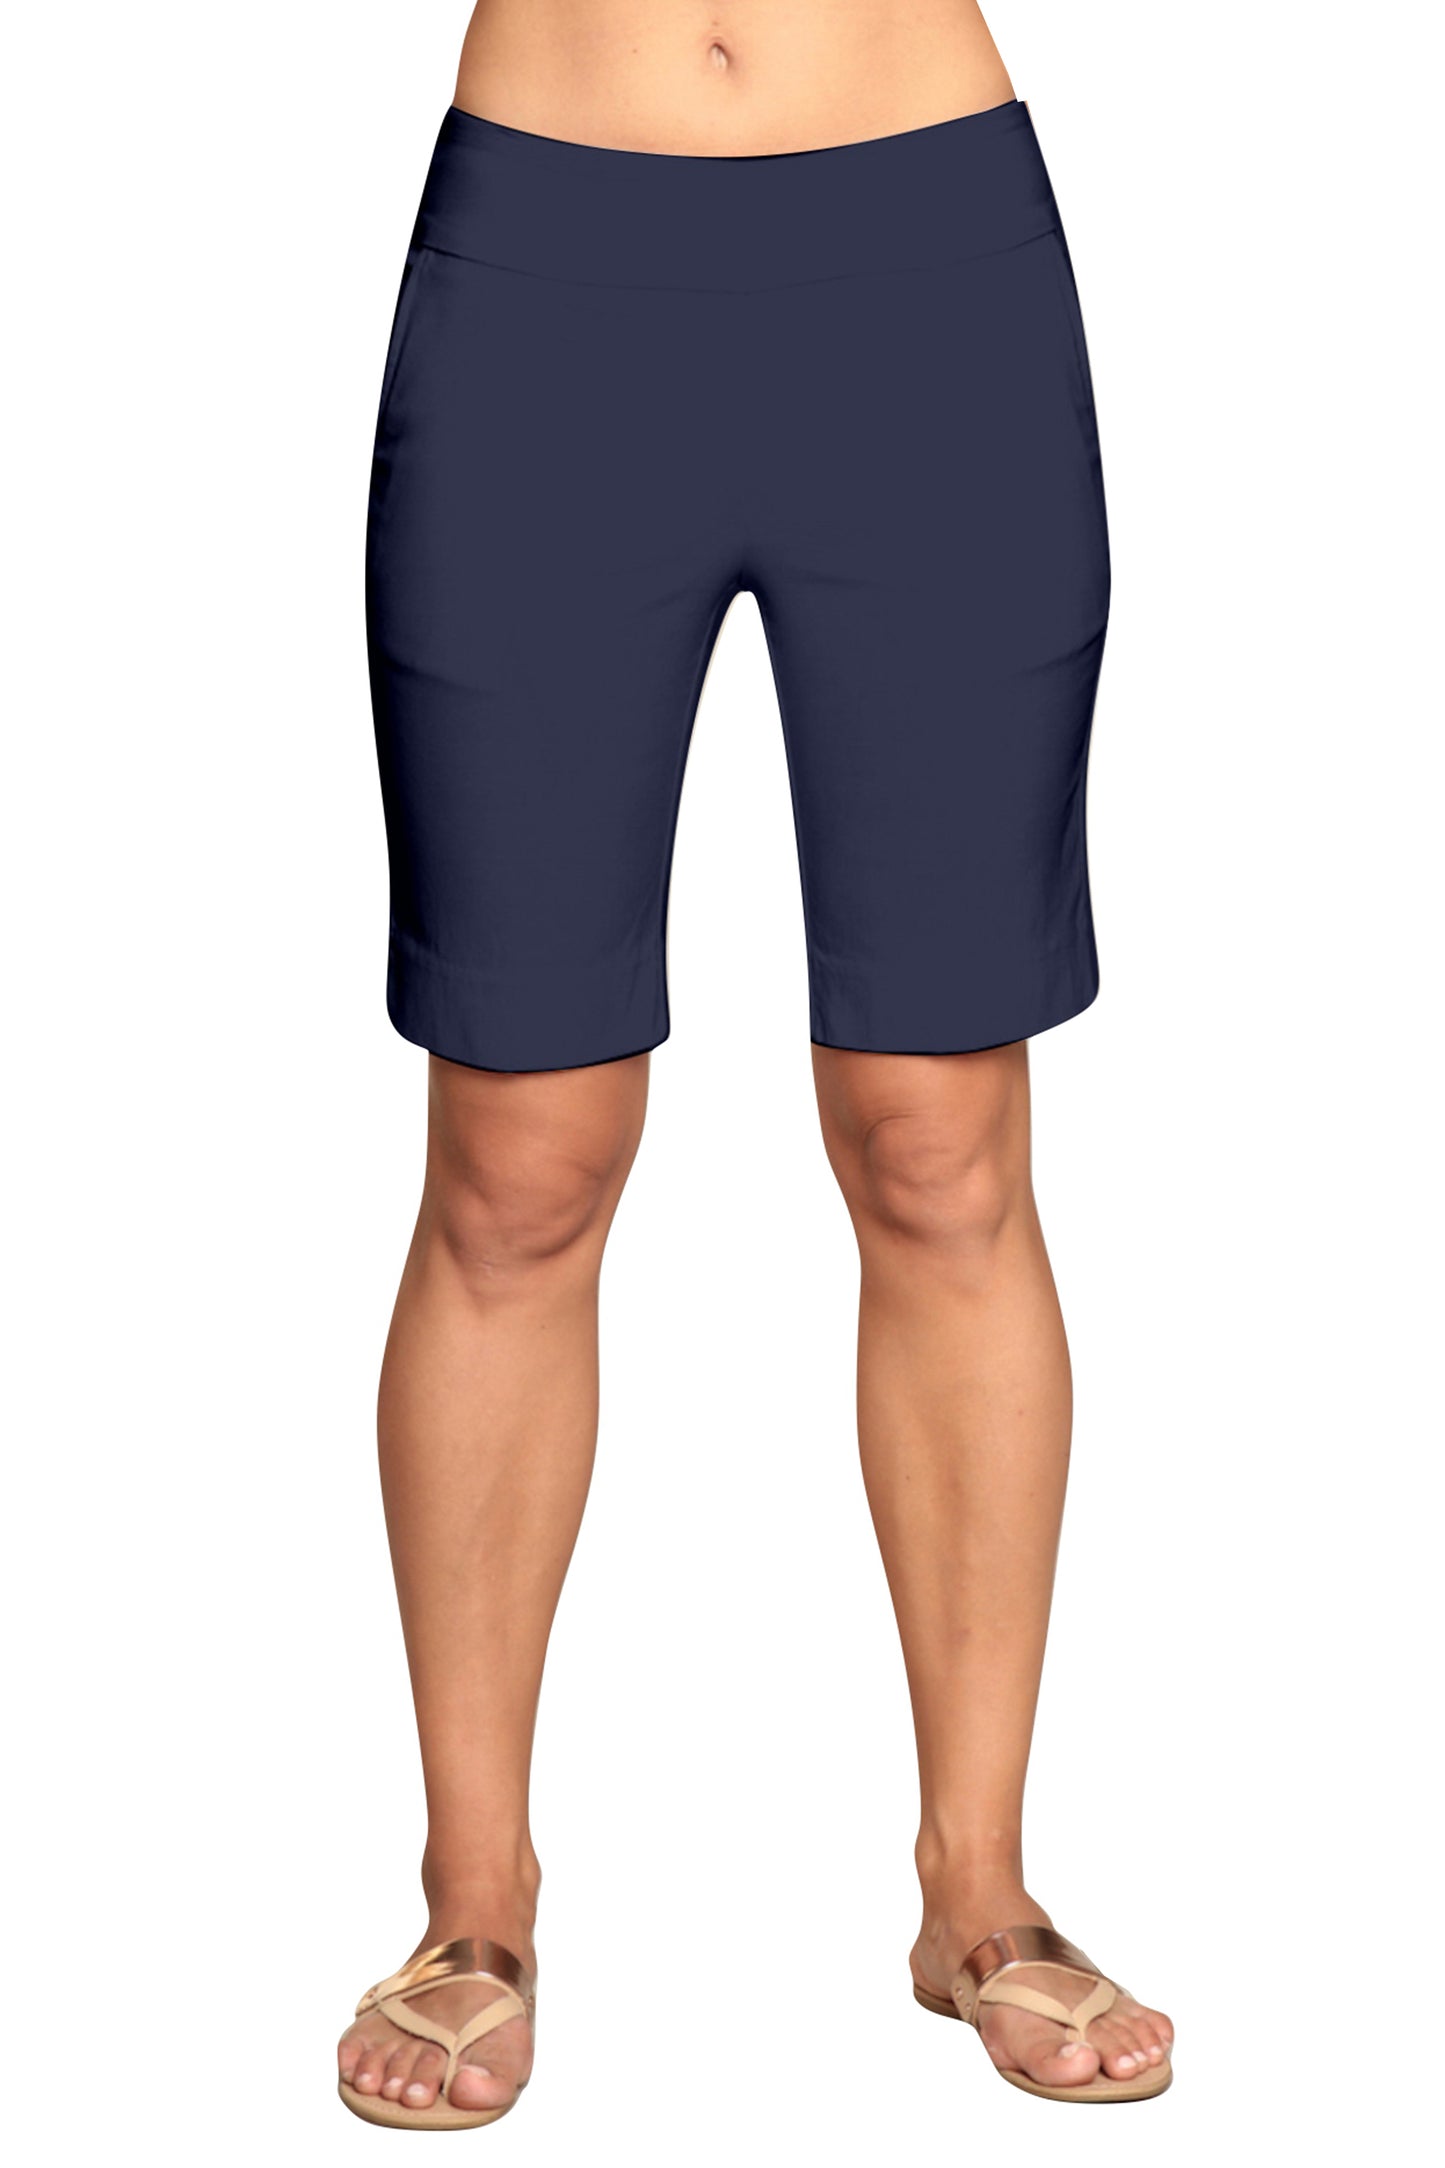 women's black golf shorts